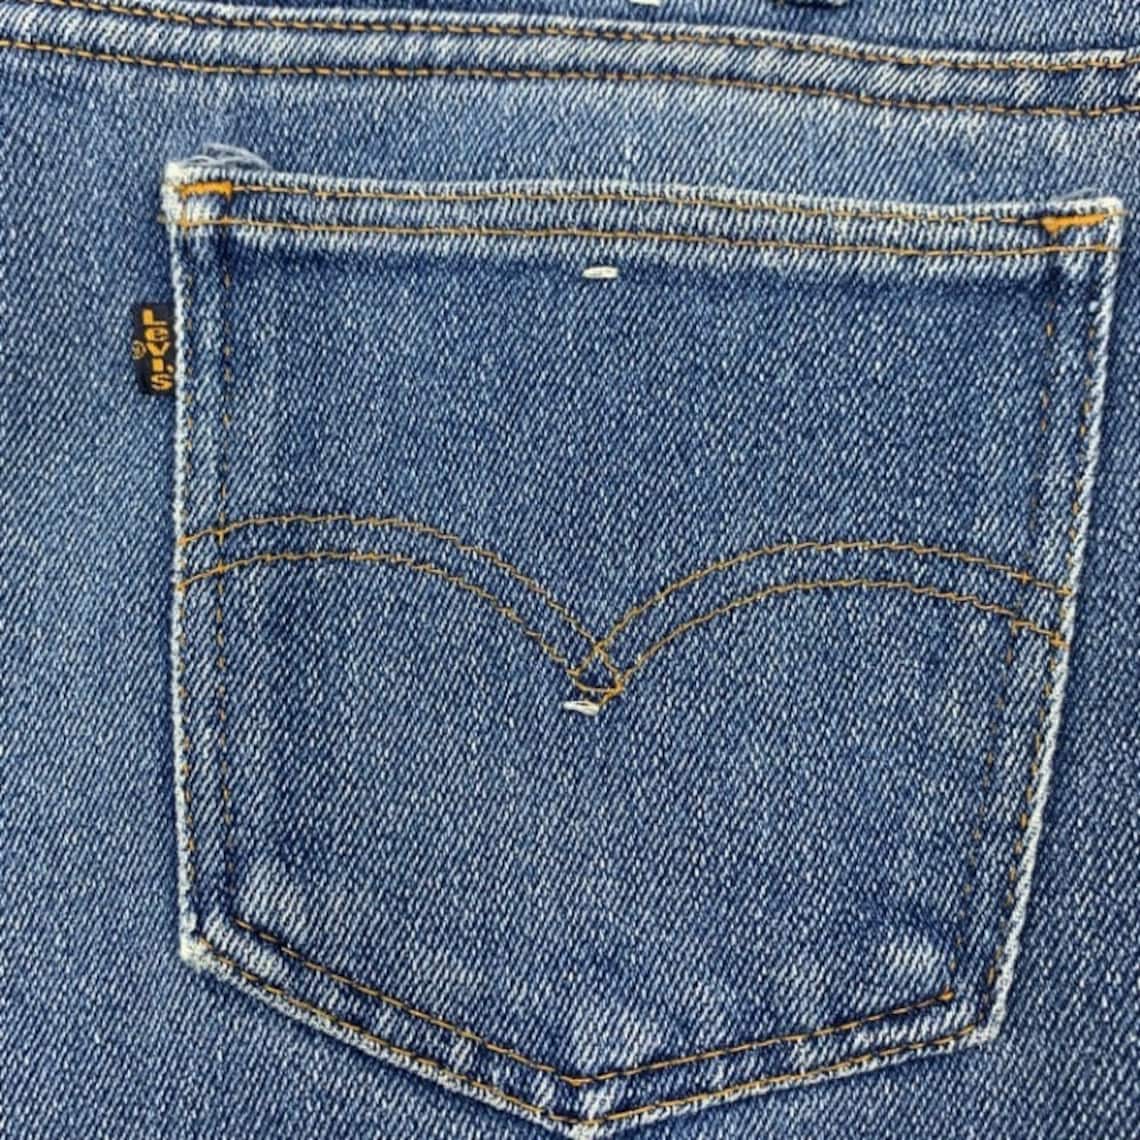 Vintage Levis Black Tab jeans 36x28 | Etsy